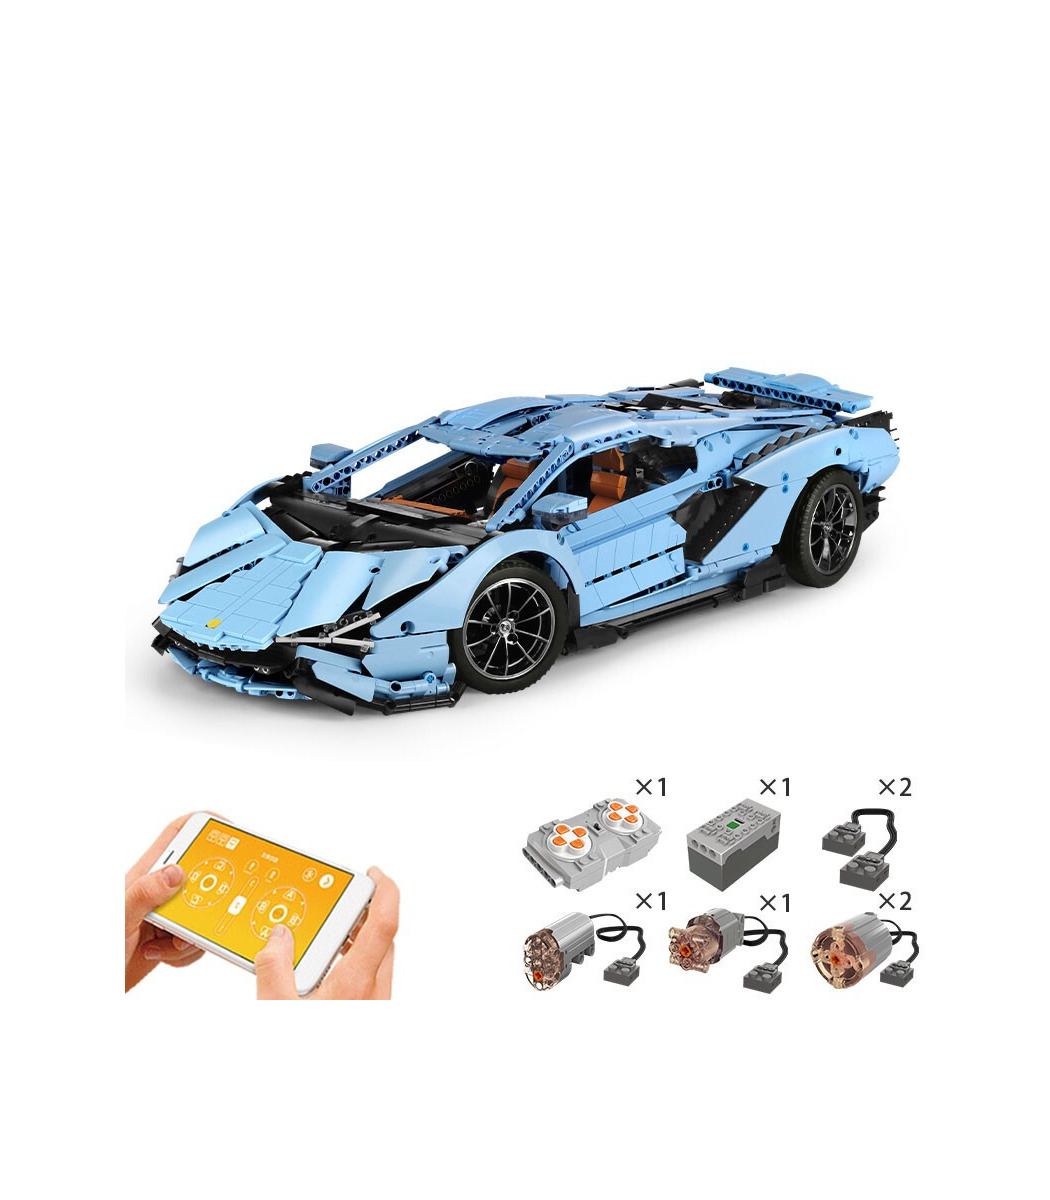 MOULD KING 13056D Lamborghini Sian FKP 37 Motor Edition Remote Control  Building Blocks Toy Set 